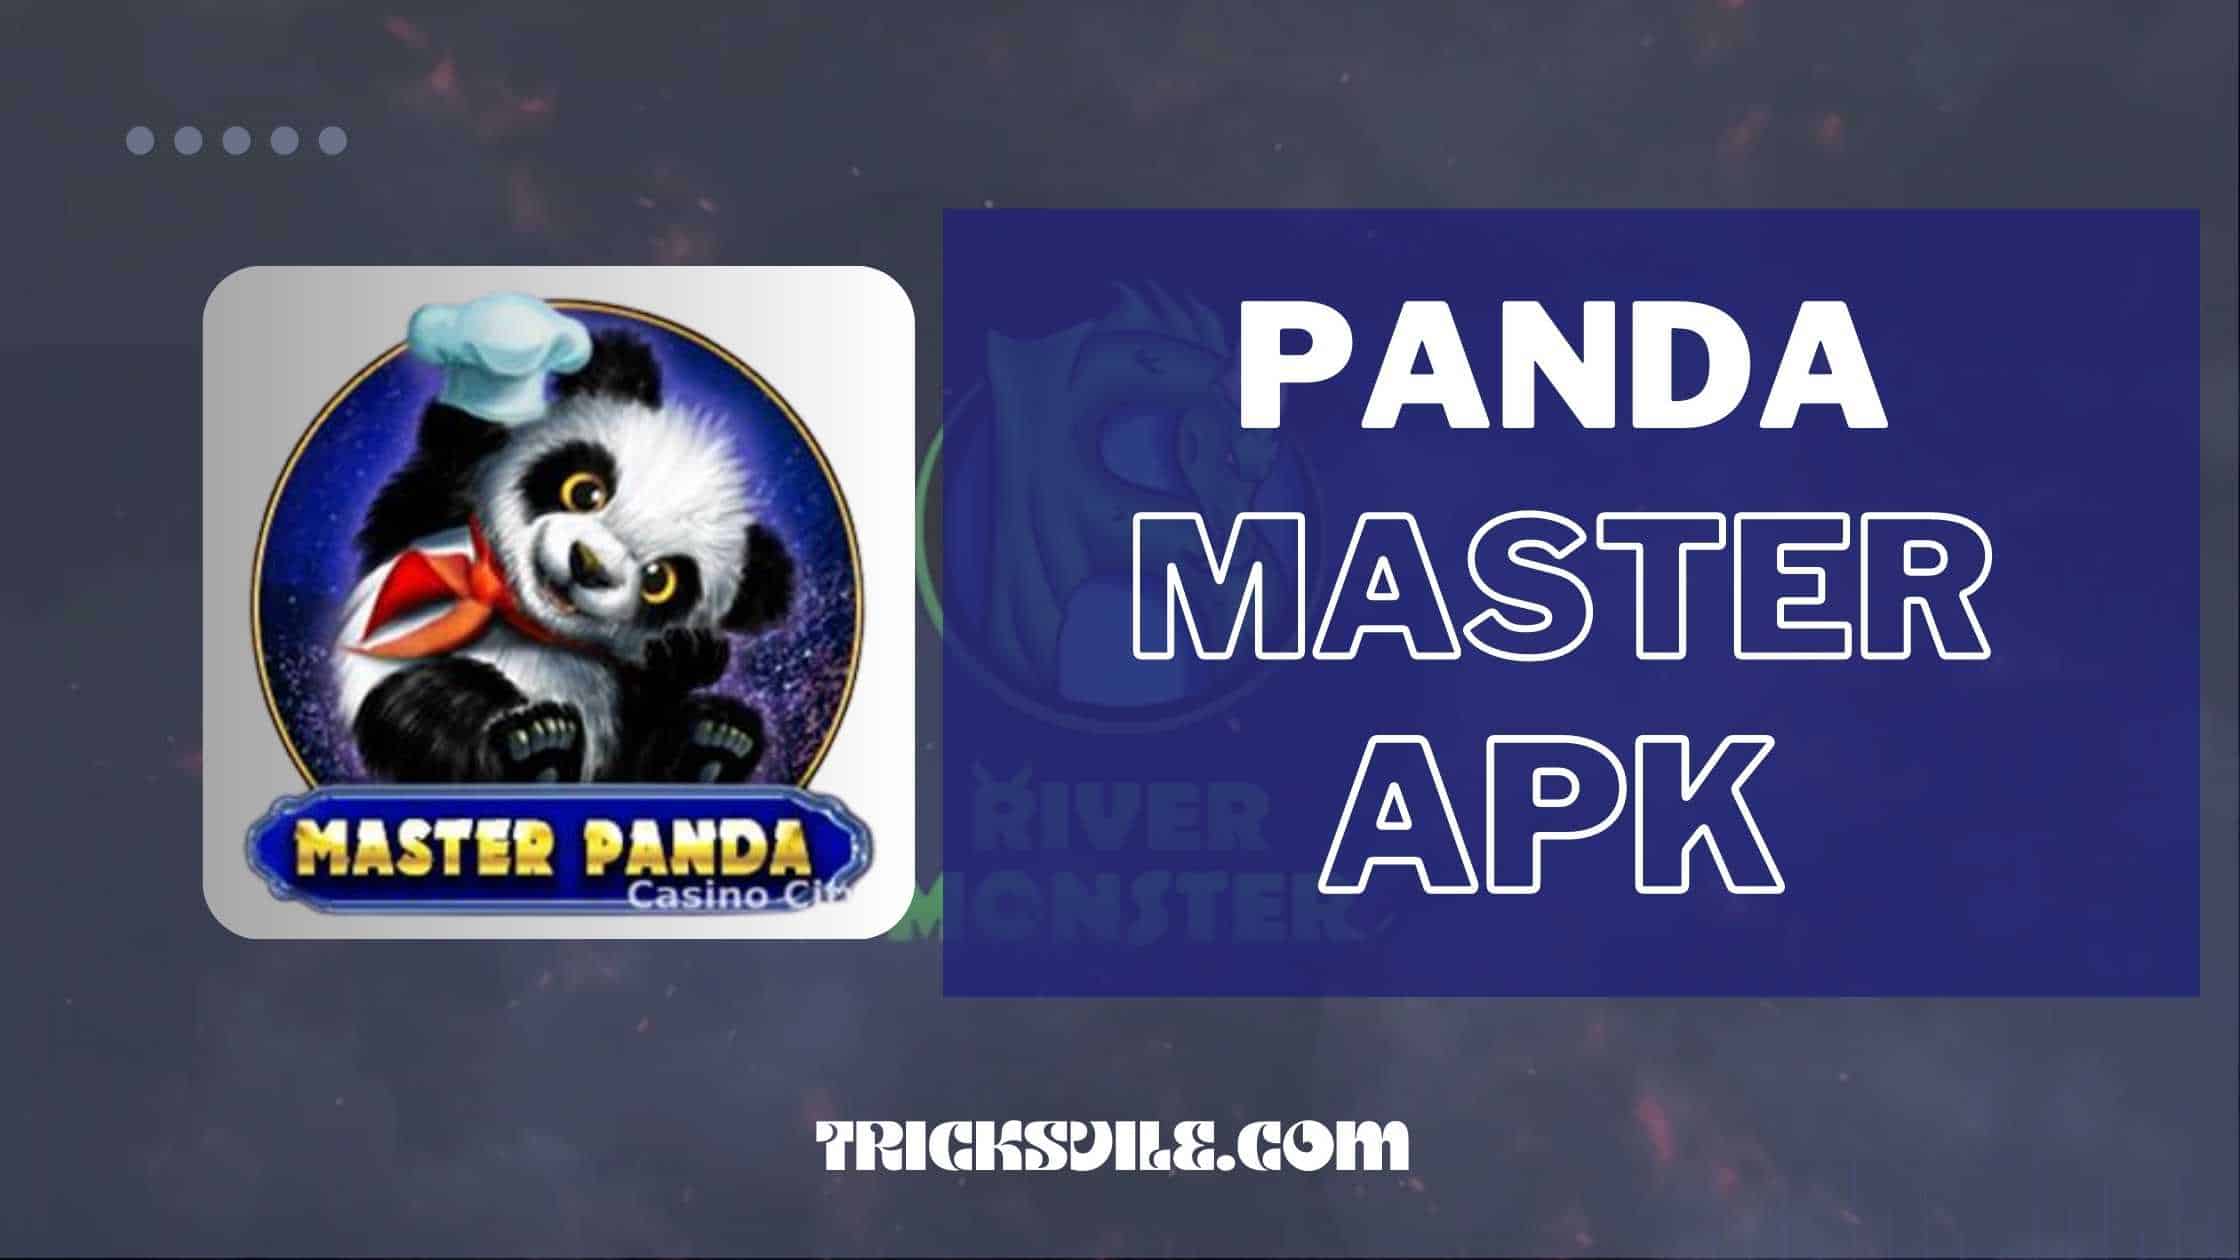  Panda master casino apk